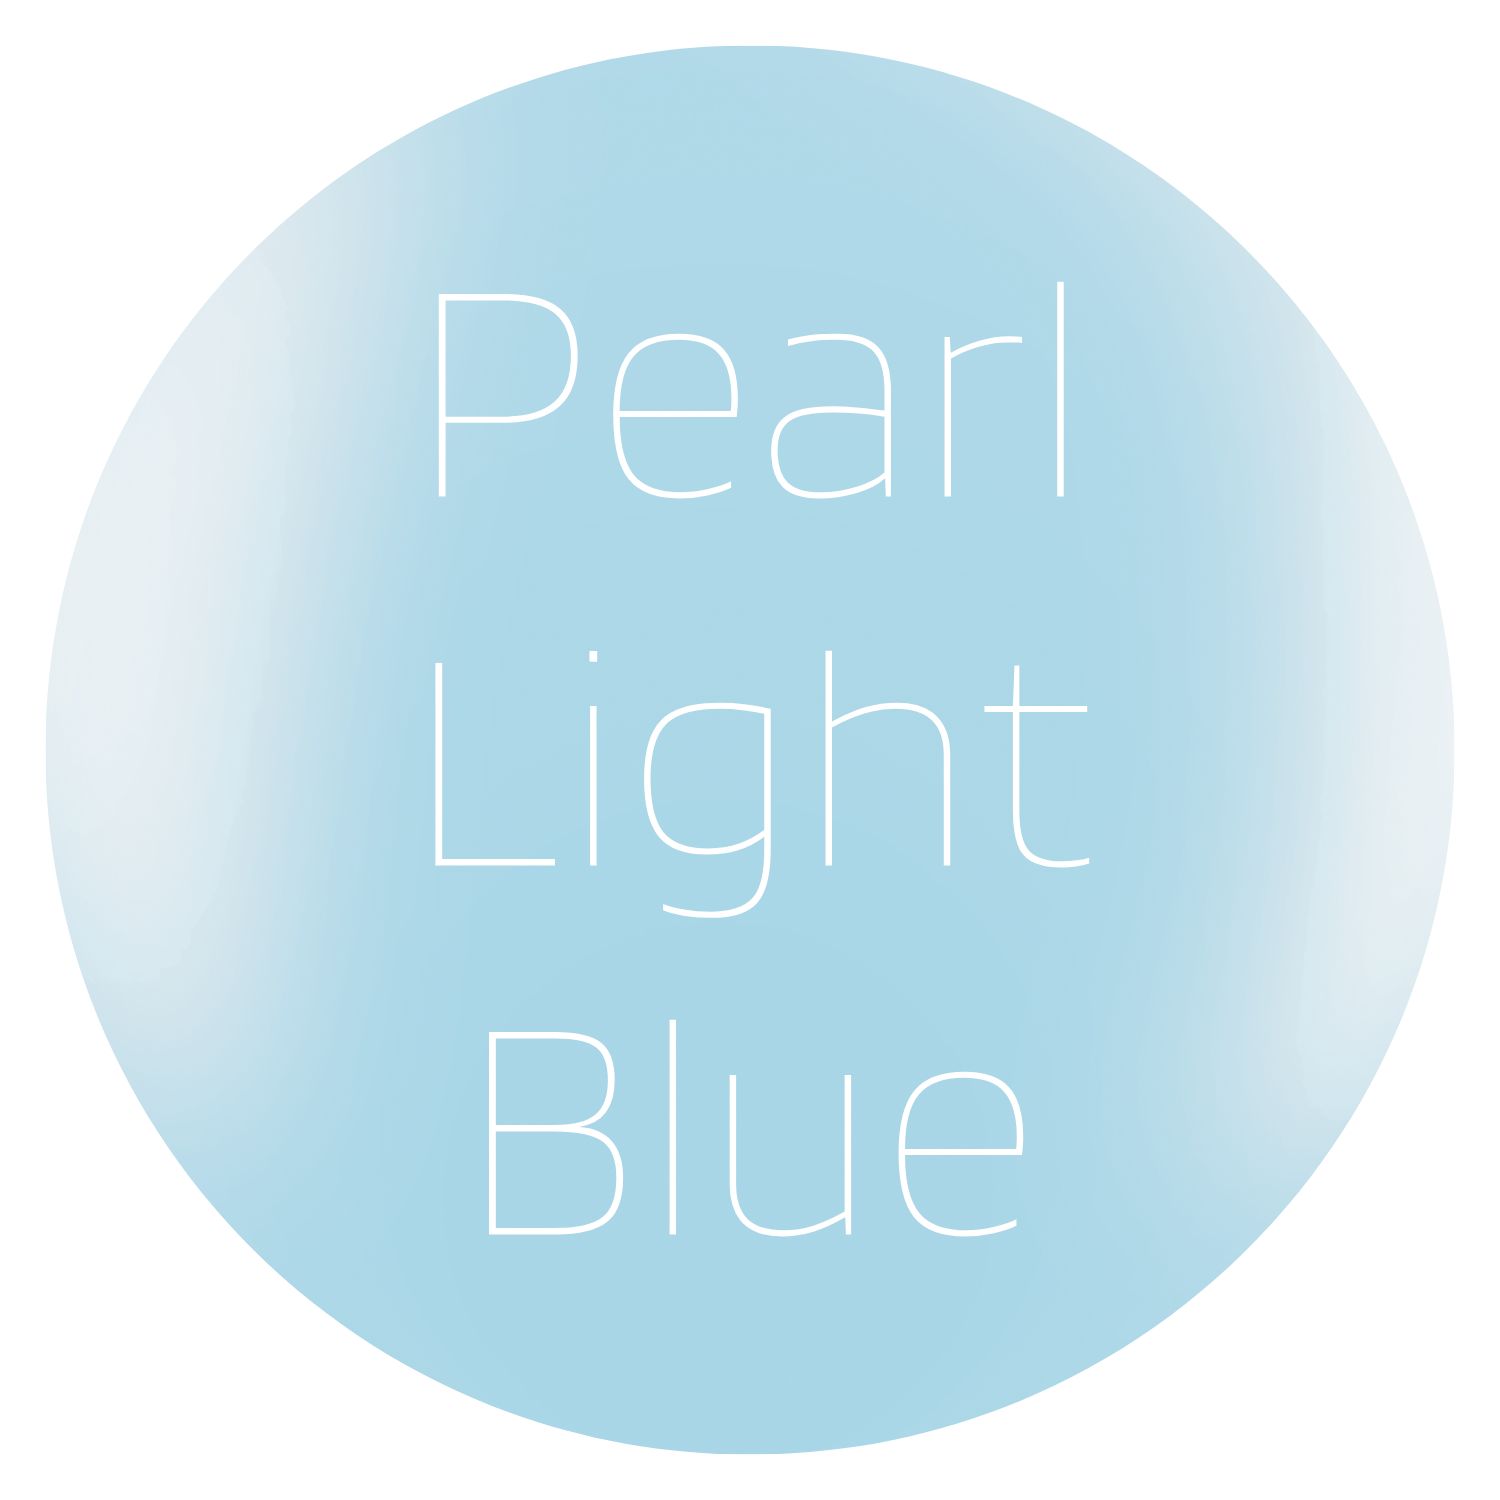 Pearl Light Blue